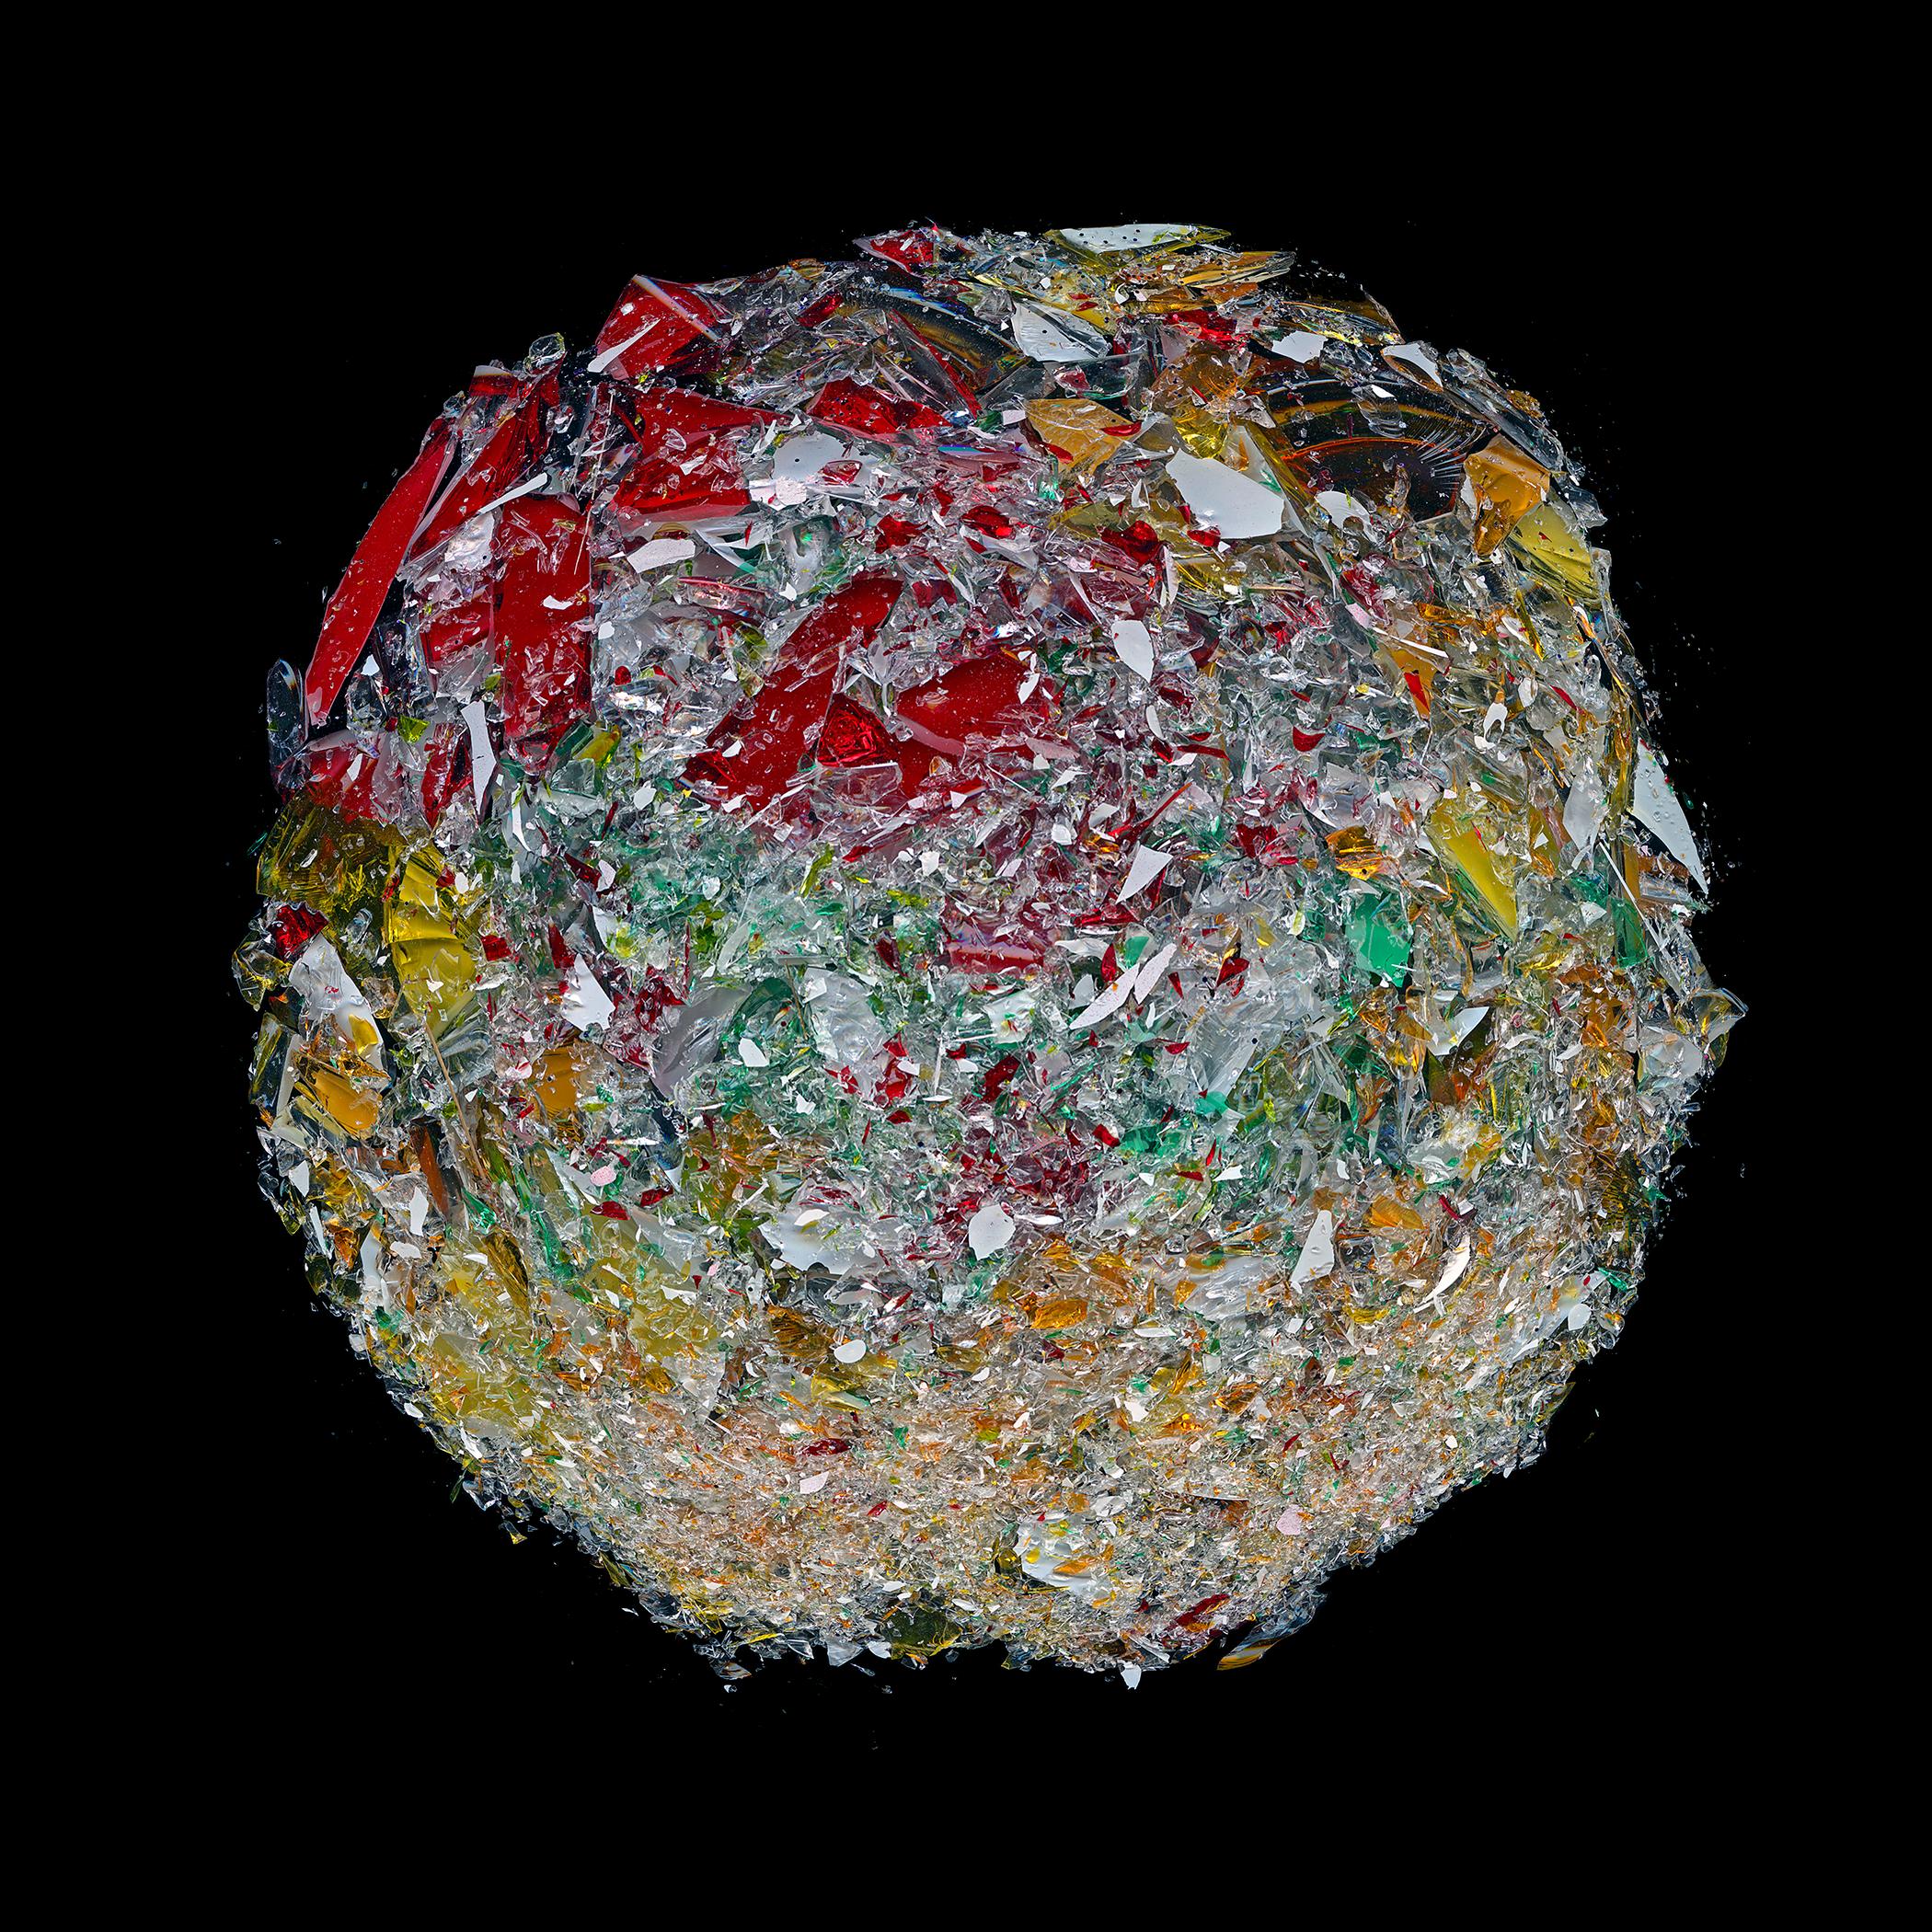 Zoltan Gerliczki Color Photograph - The Broken Mind Planet. Abstract Digital Color Collage Photograph